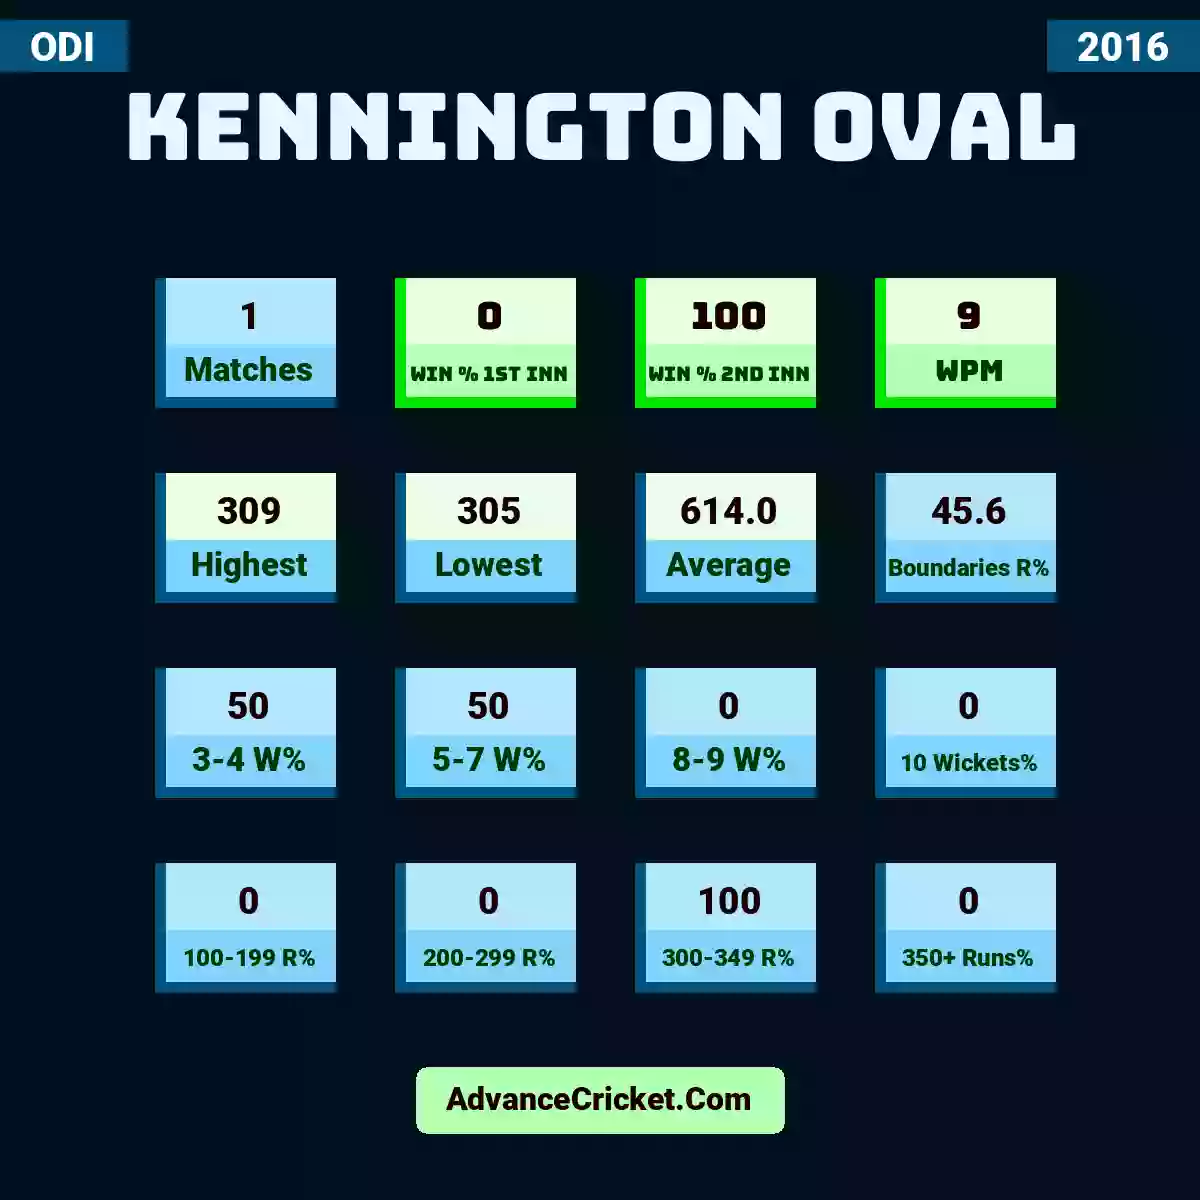 Image showing Kennington Oval with Matches: 1, Win % 1st Inn: 0, Win % 2nd Inn: 100, WPM: 9, Highest: 309, Lowest: 305, Average: 614.0, Boundaries R%: 45.6, 3-4 W%: 50, 5-7 W%: 50, 8-9 W%: 0, 10 Wickets%: 0, 100-199 R%: 0, 200-299 R%: 0, 300-349 R%: 100, 350+ Runs%: 0.